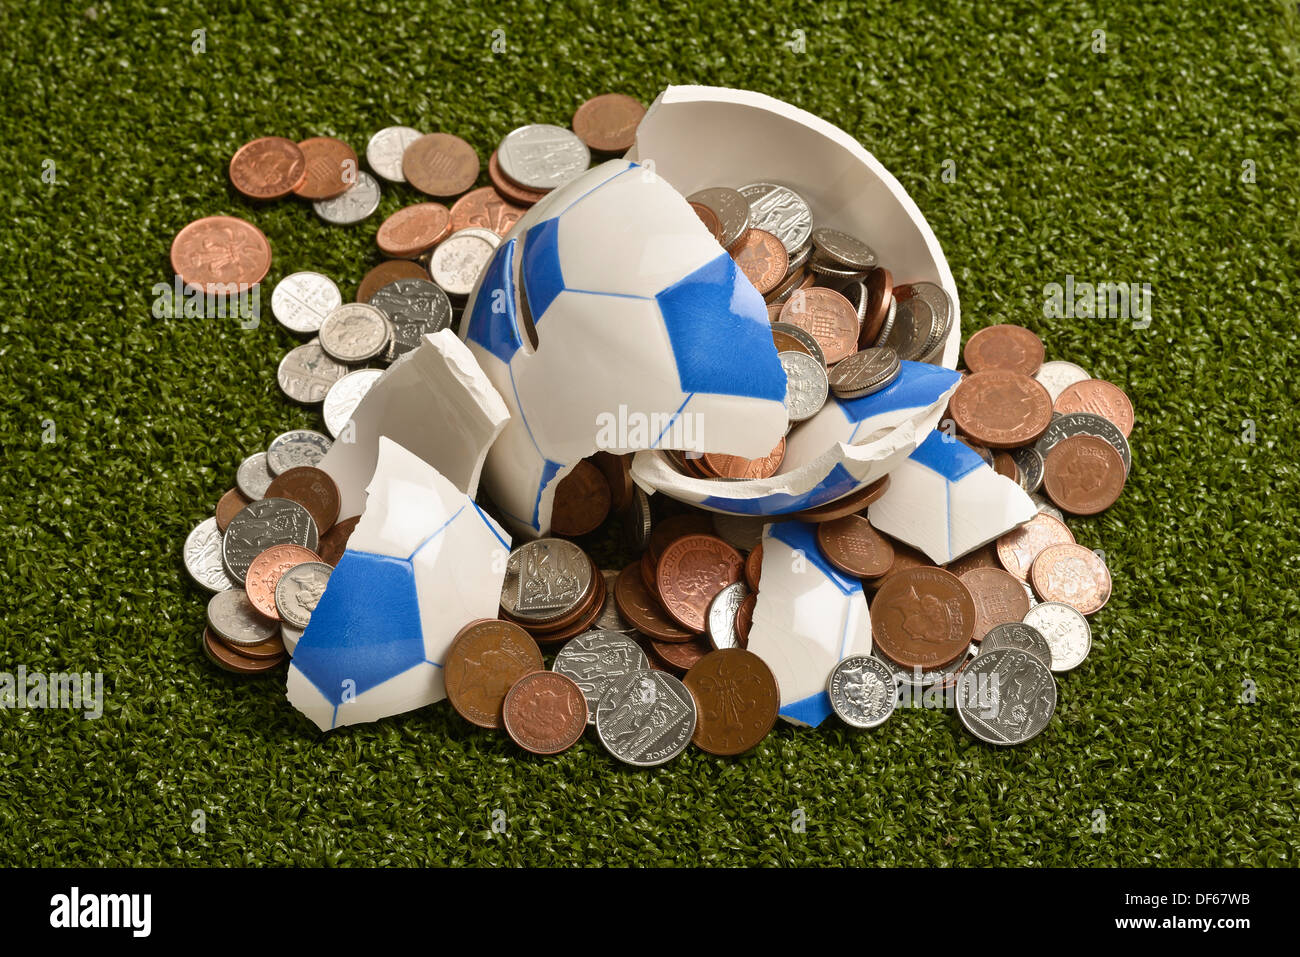 Smashed and broken football piggy bank money Stock Photo